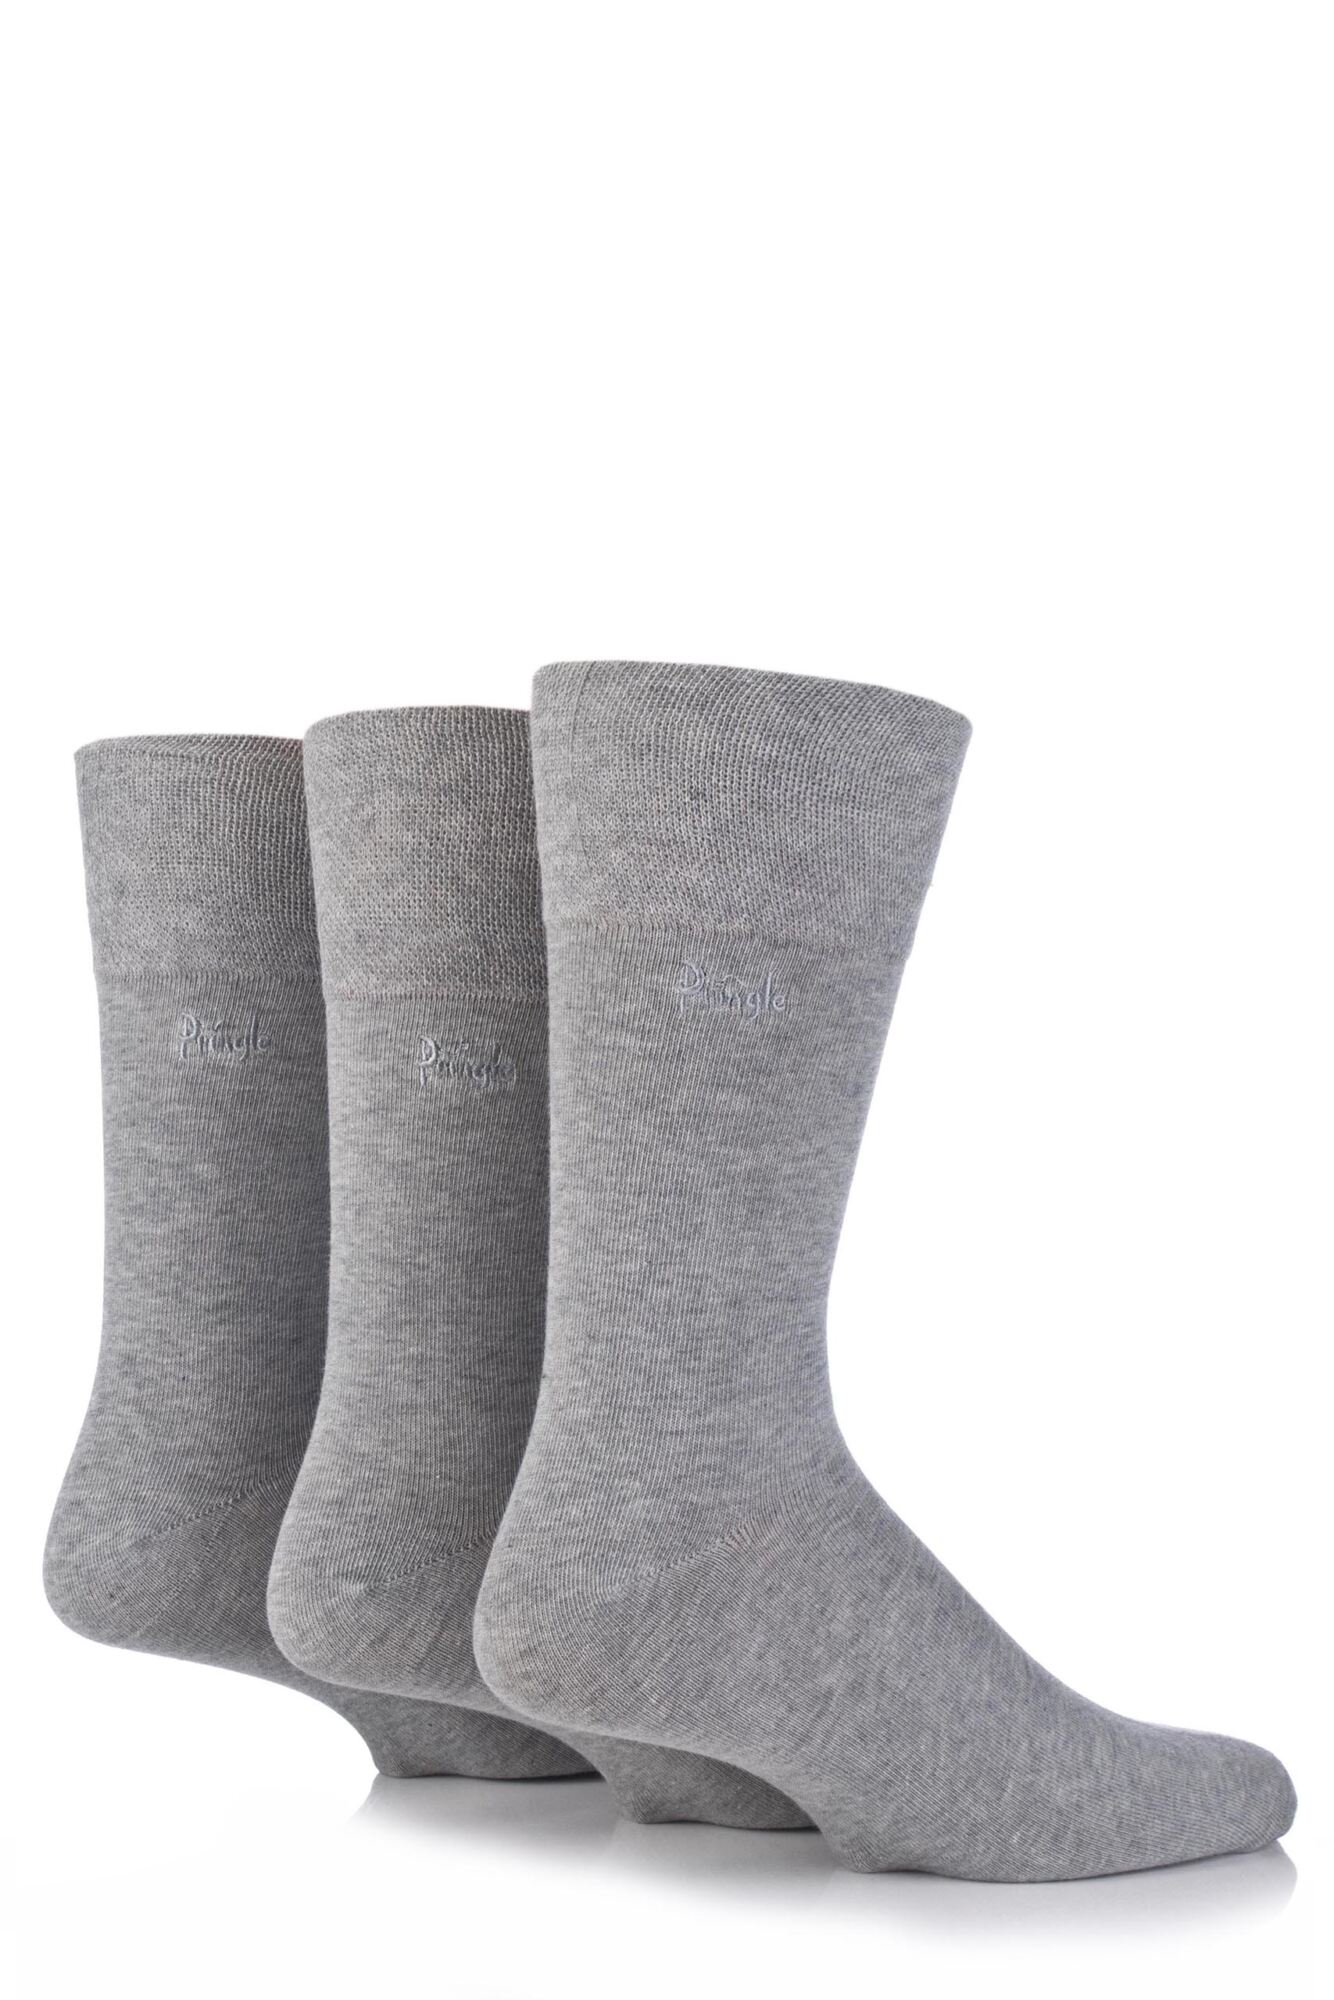 Pringle Dunvegan Comfort Cuff Plain Cotton Socks